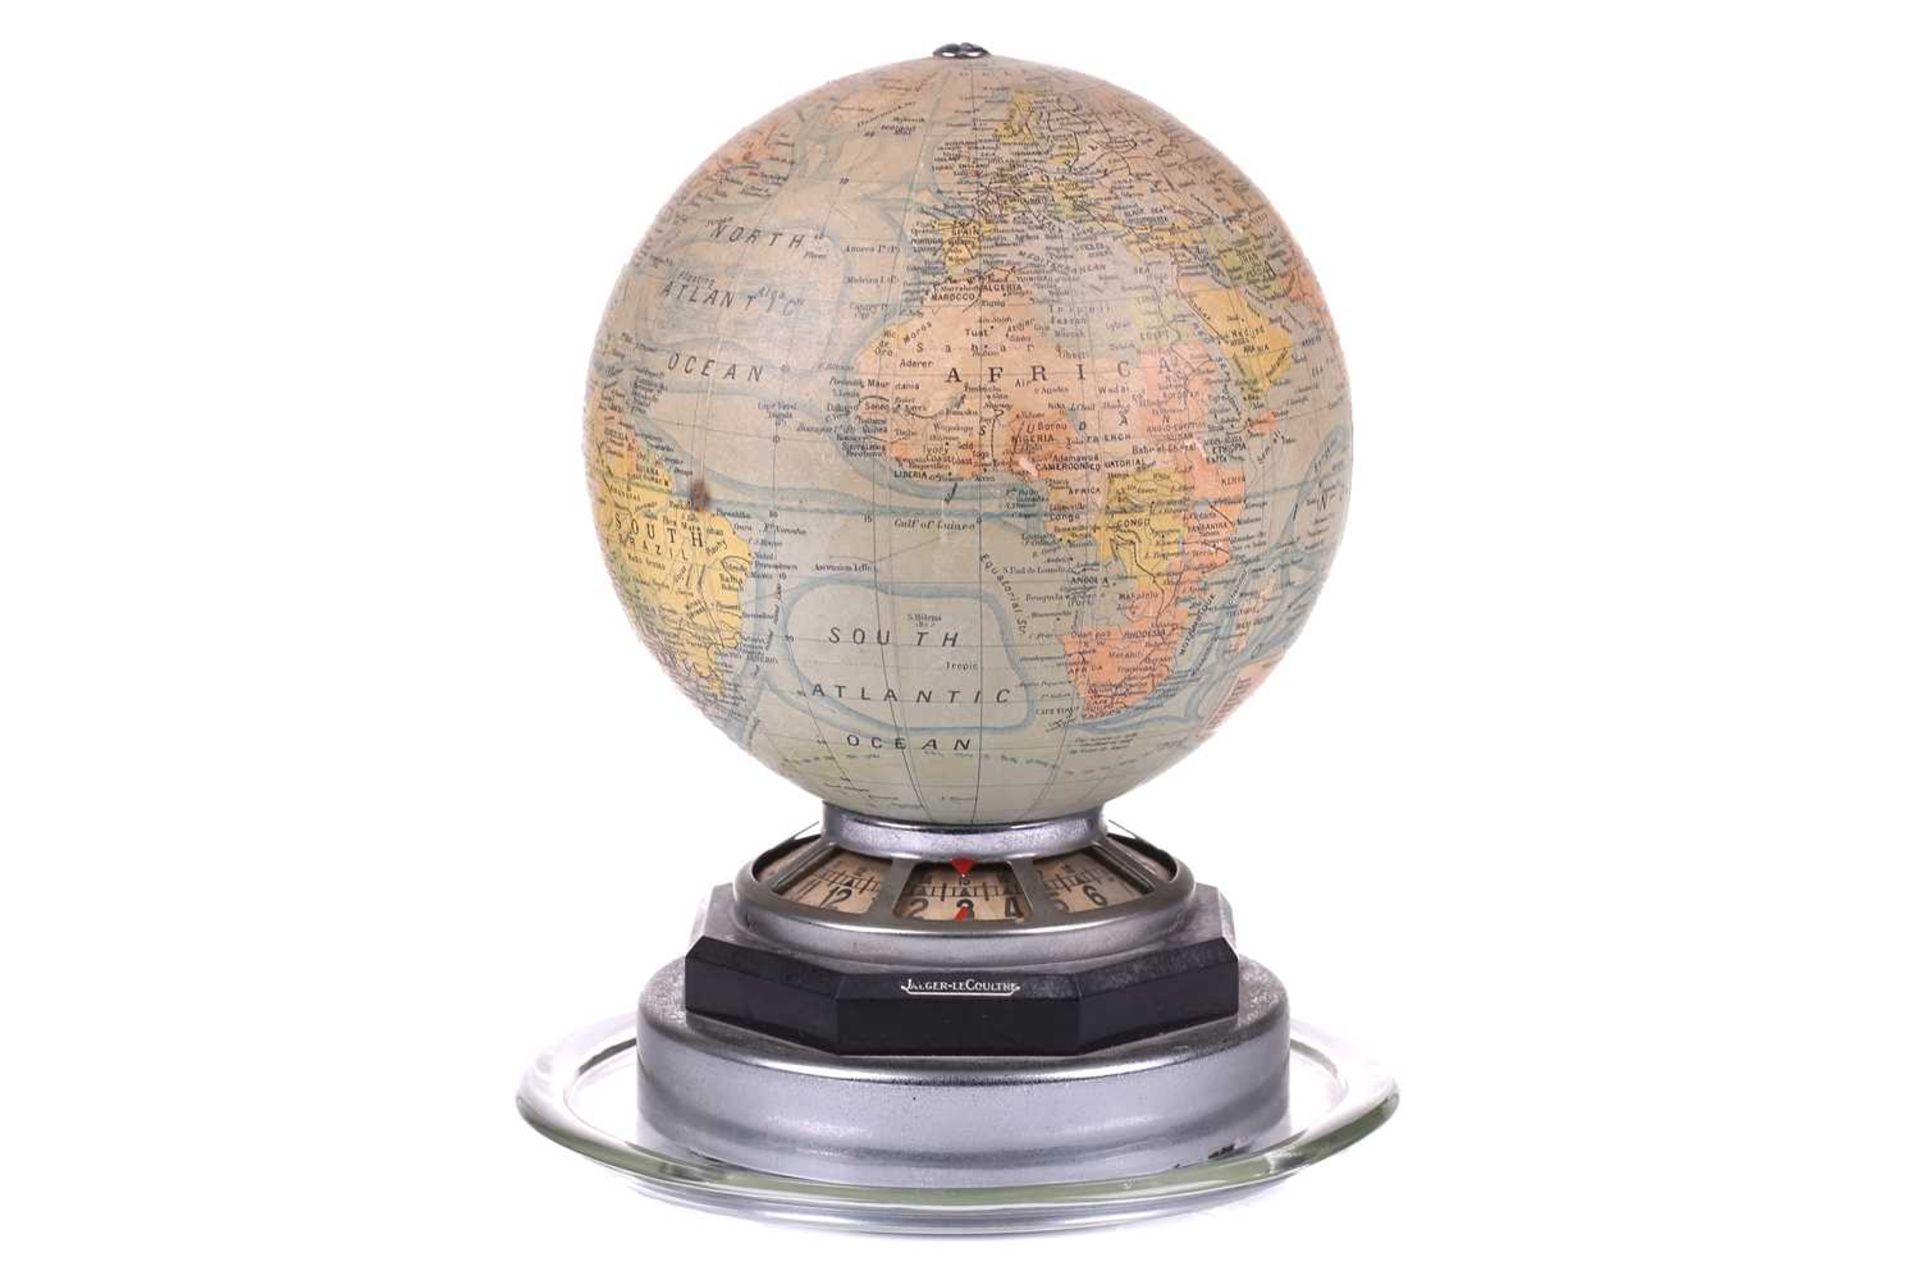 A rare Jaeger-LeCoultre illuminating globe world time desk clock, the terrestrial paper on glass